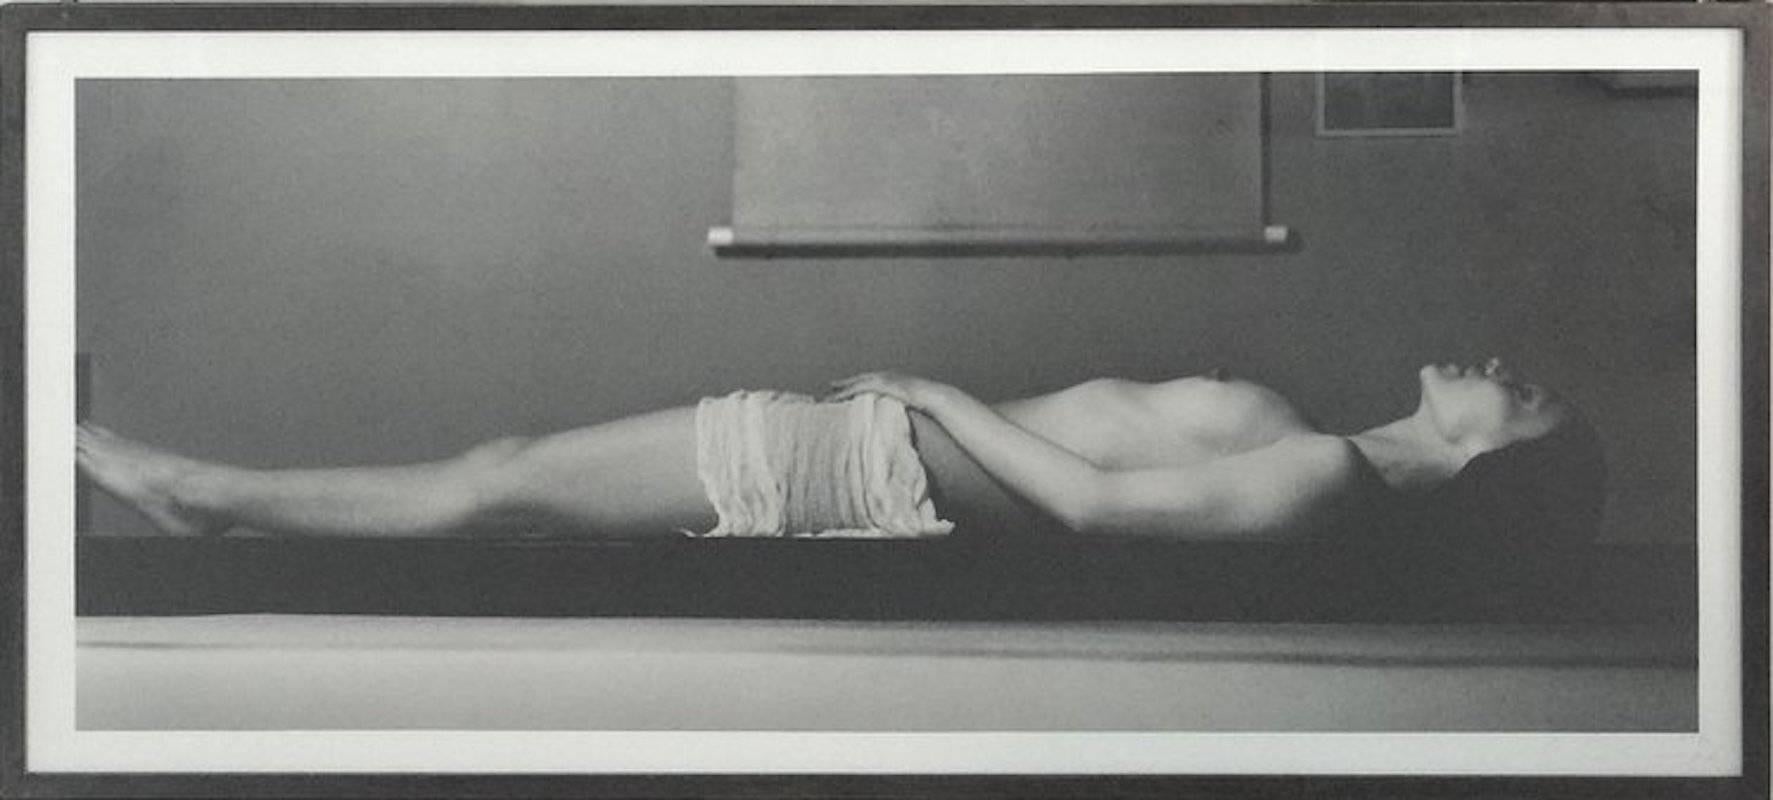 "Aiko Tokyo", Framed Silver Gelatin Print, 1989 - Photograph by Michel Comte